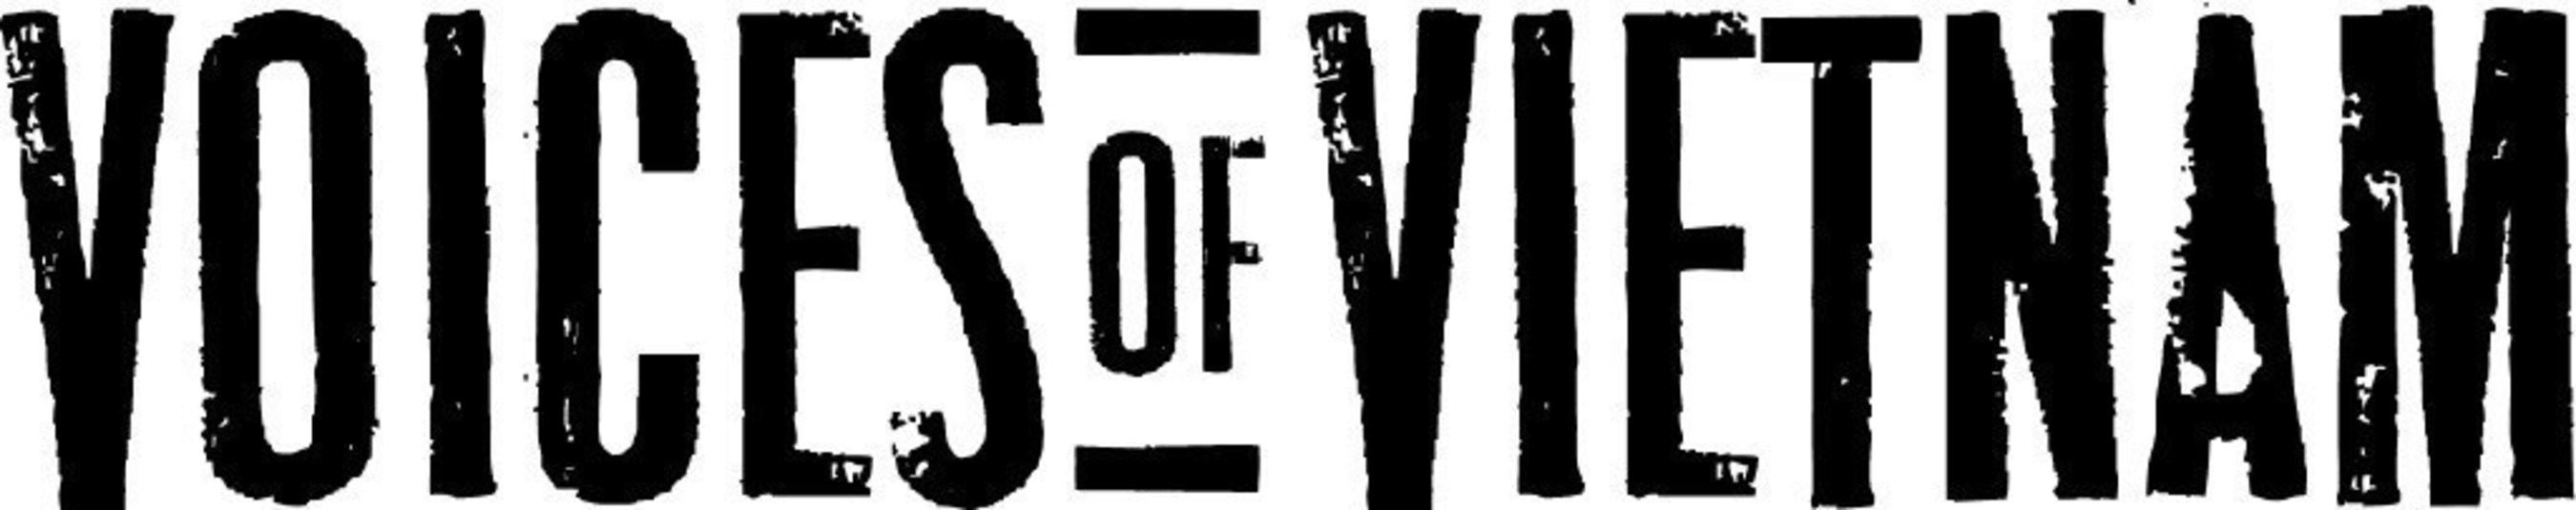 Voices of Vietnam Logo